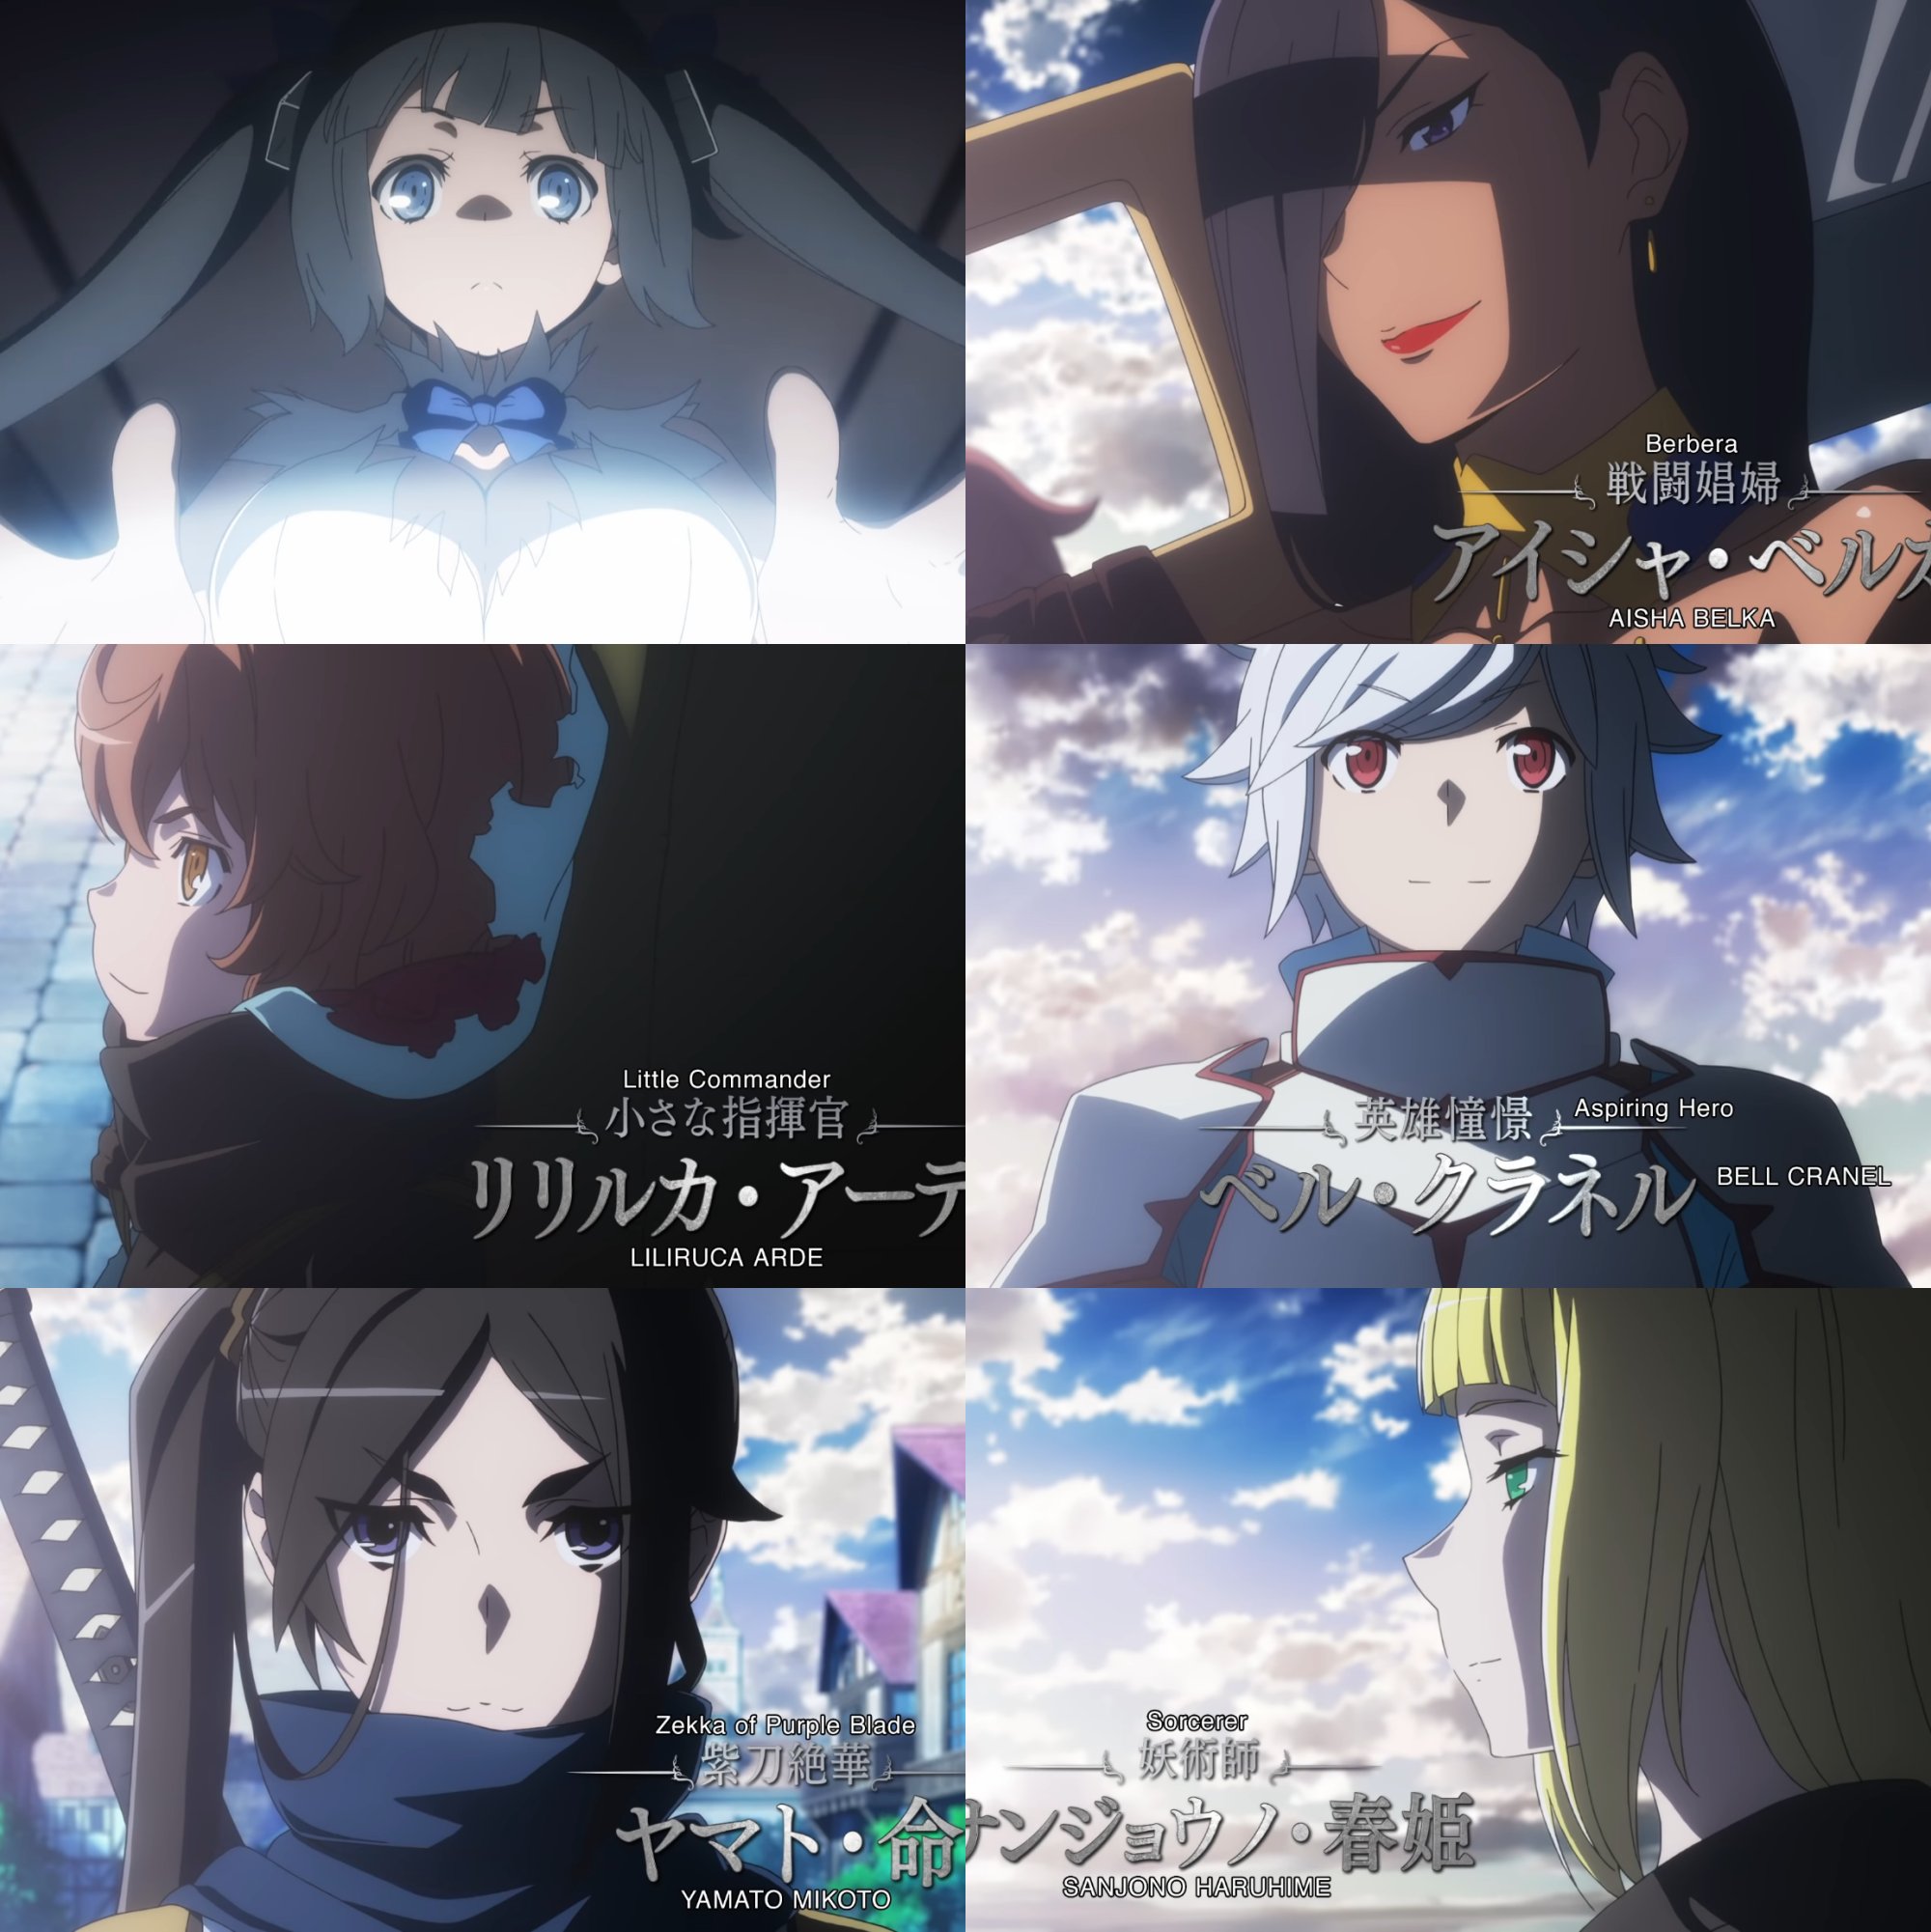 Anime Corner News - JUST IN: DanMachi Season 4 revealed a new trailer!  Watch:  Read  more